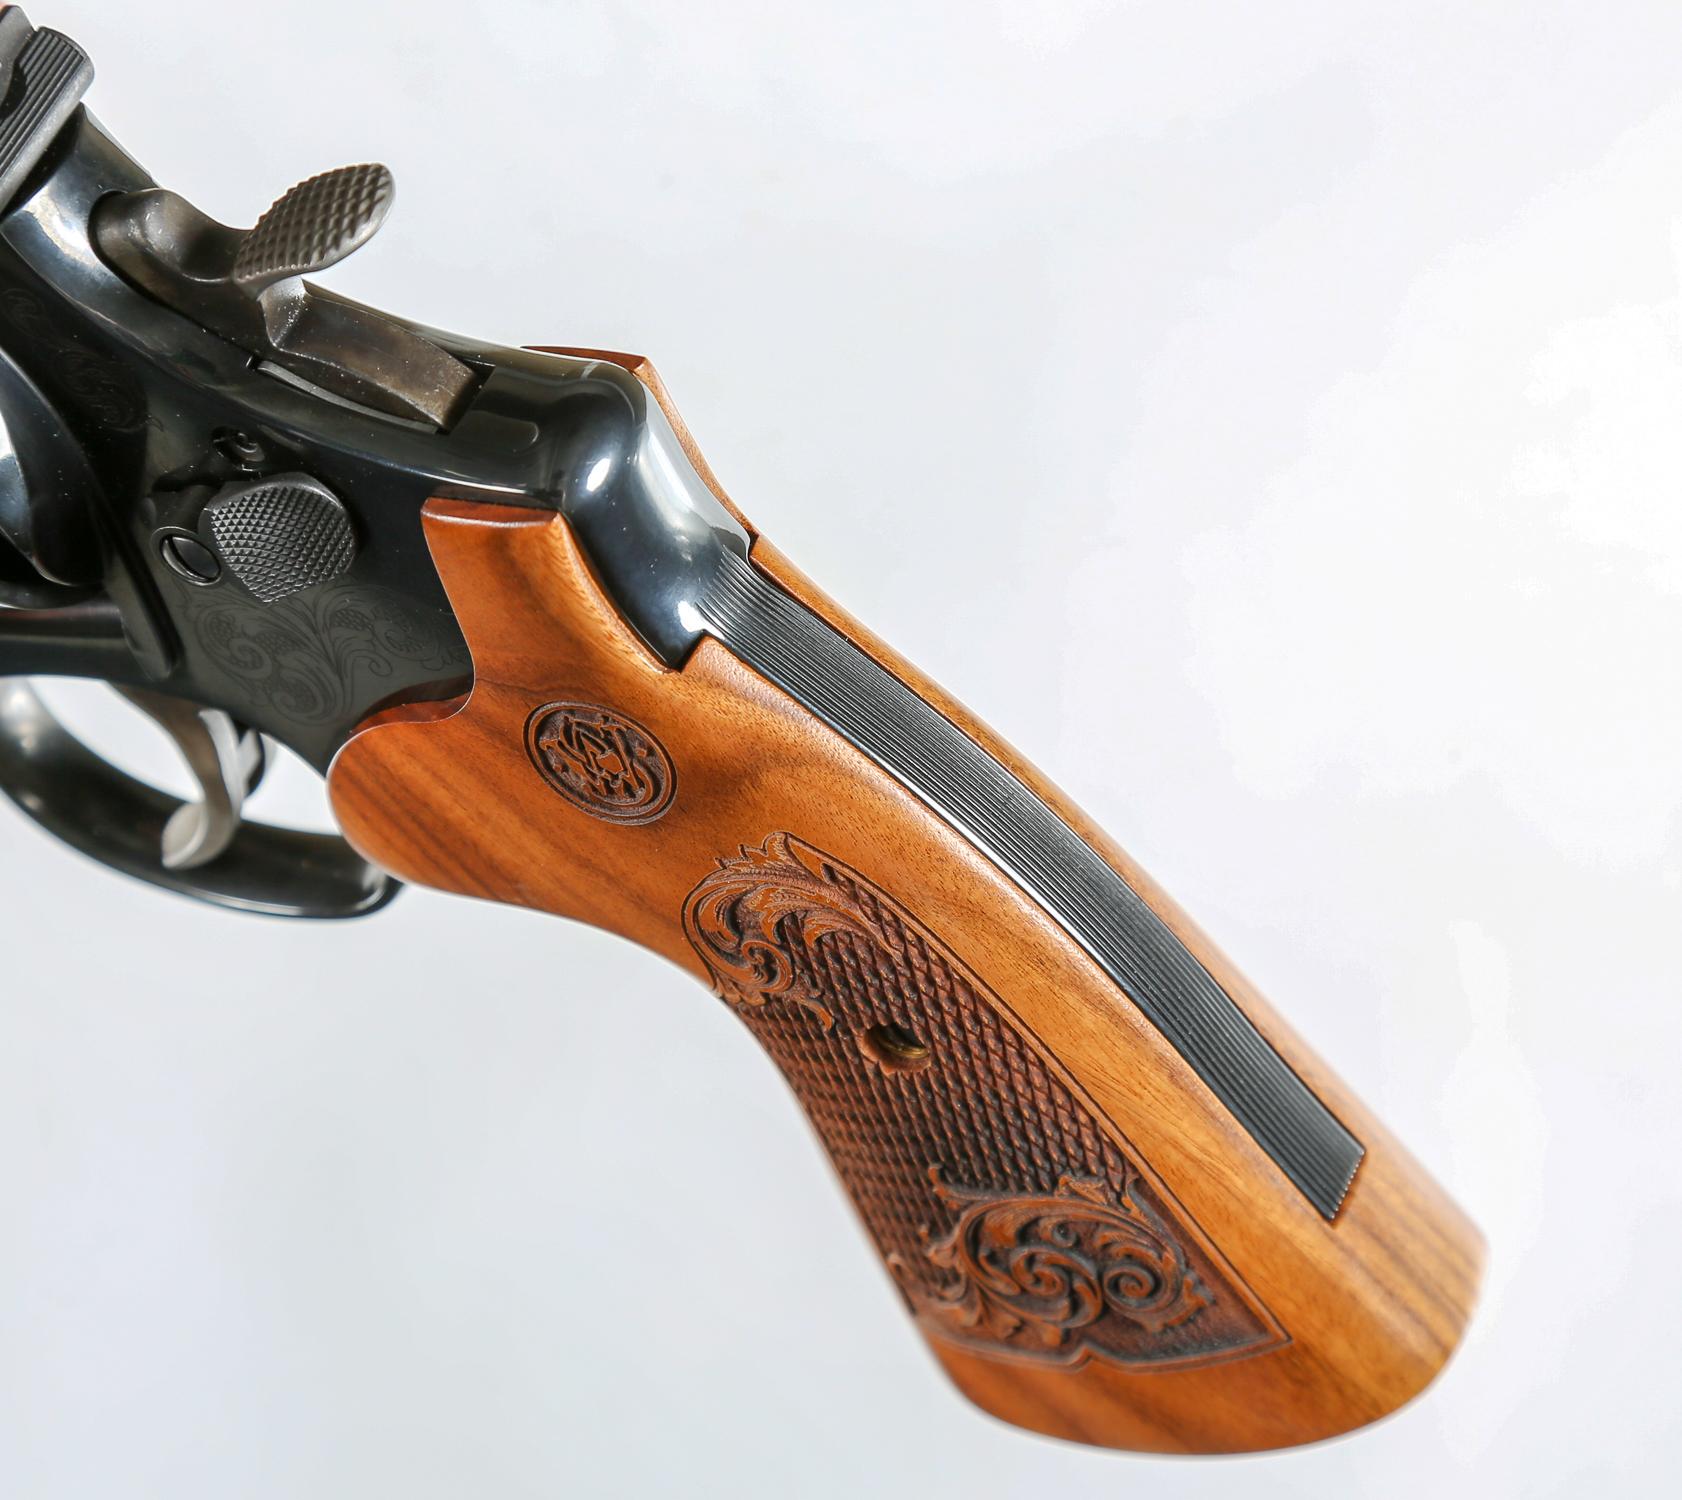 Smith & Wesson 29-10 Revolver .44 mag